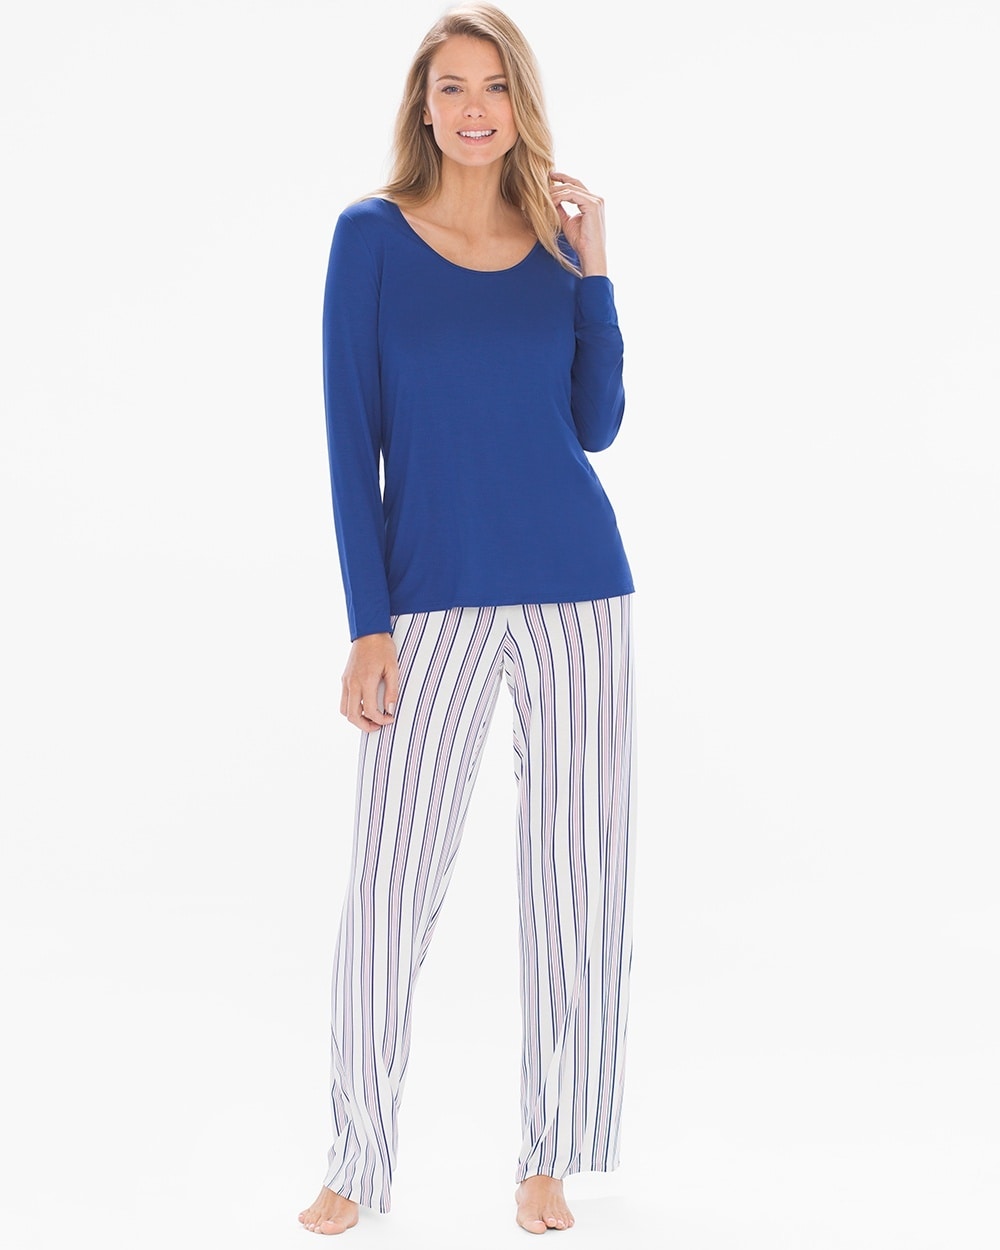 Cool Nights Long Sleeve Pajama Set Noble Stripe Sapphire